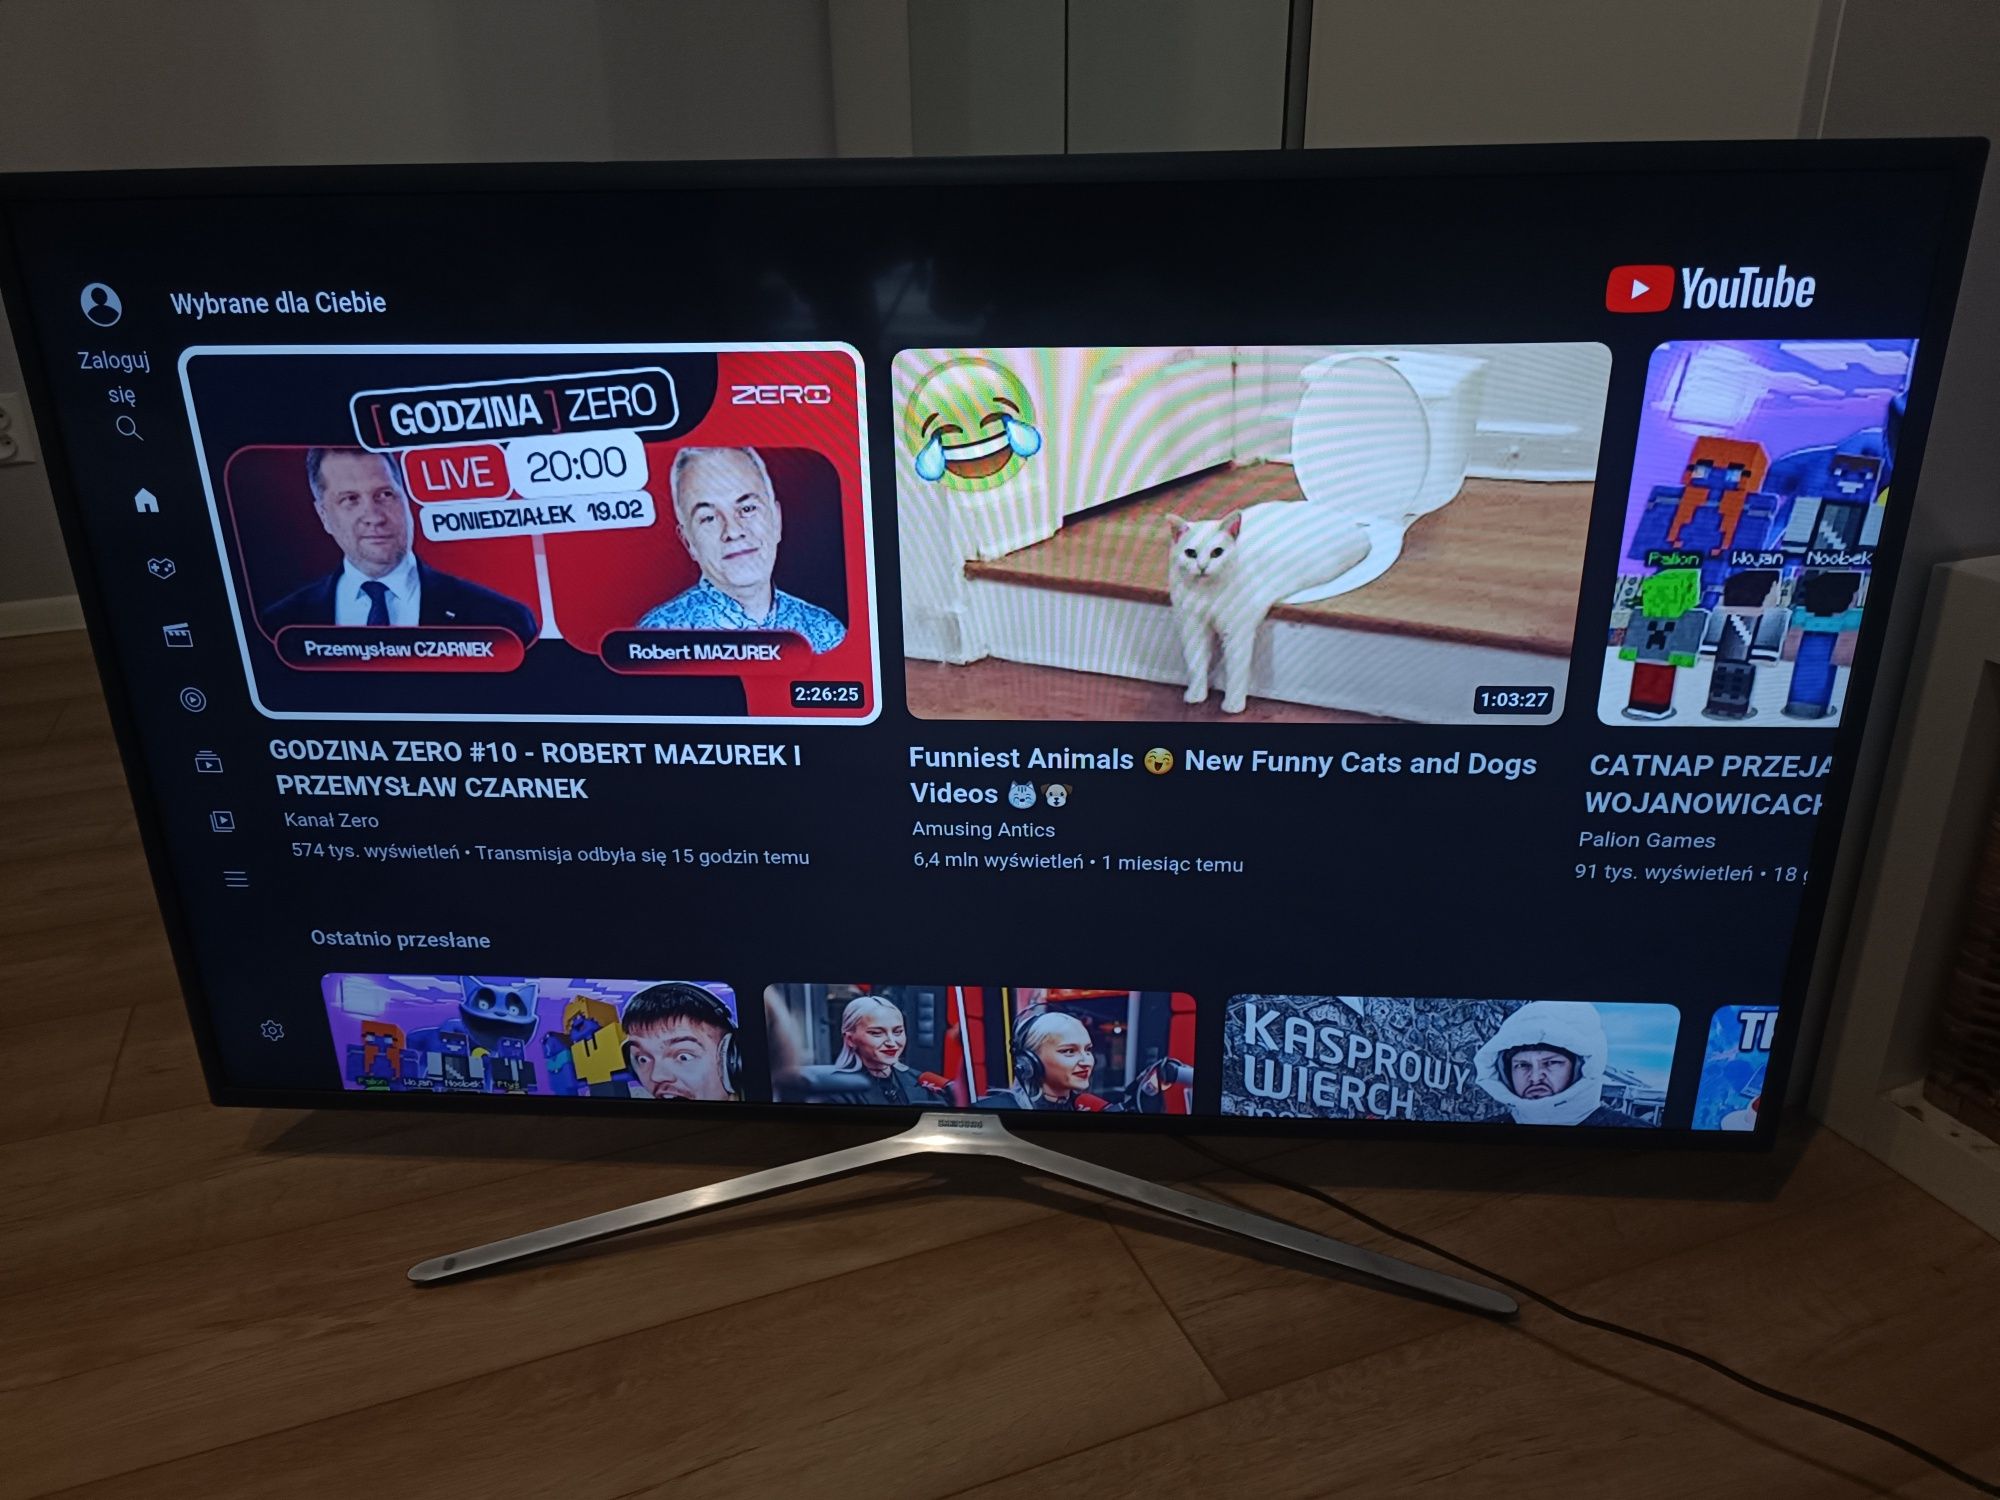 Samsung 55" Smart TV 800Hz Full HD Netflix HBO Rokuten Disney Prime